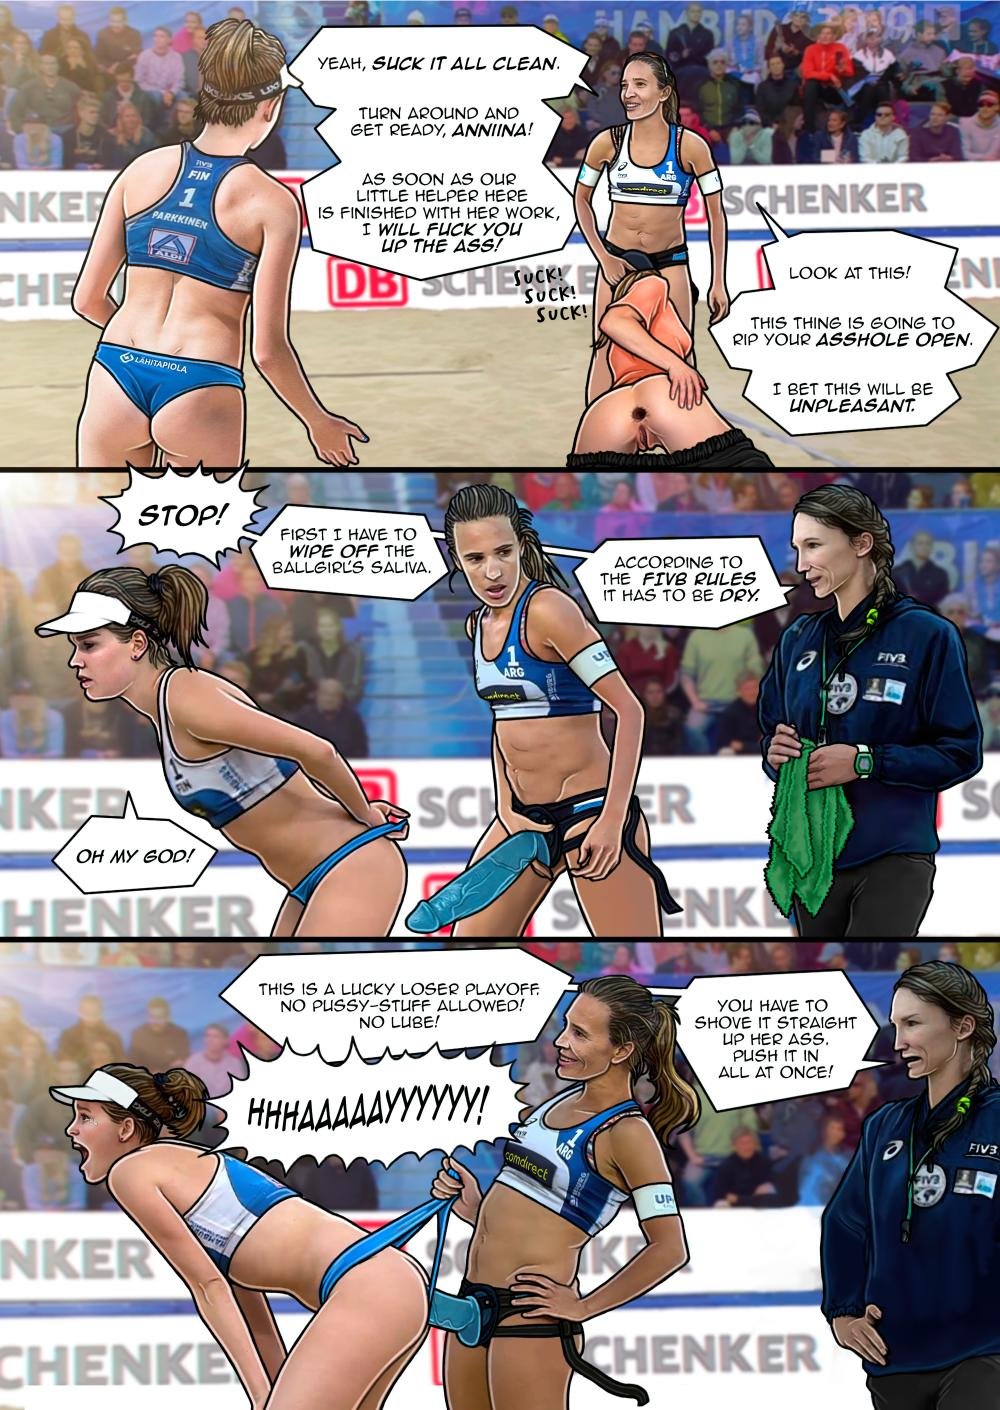 Argentina vs Finland - Beach Volleyball World Championship 2019 comic porn  - HD Porn Comics